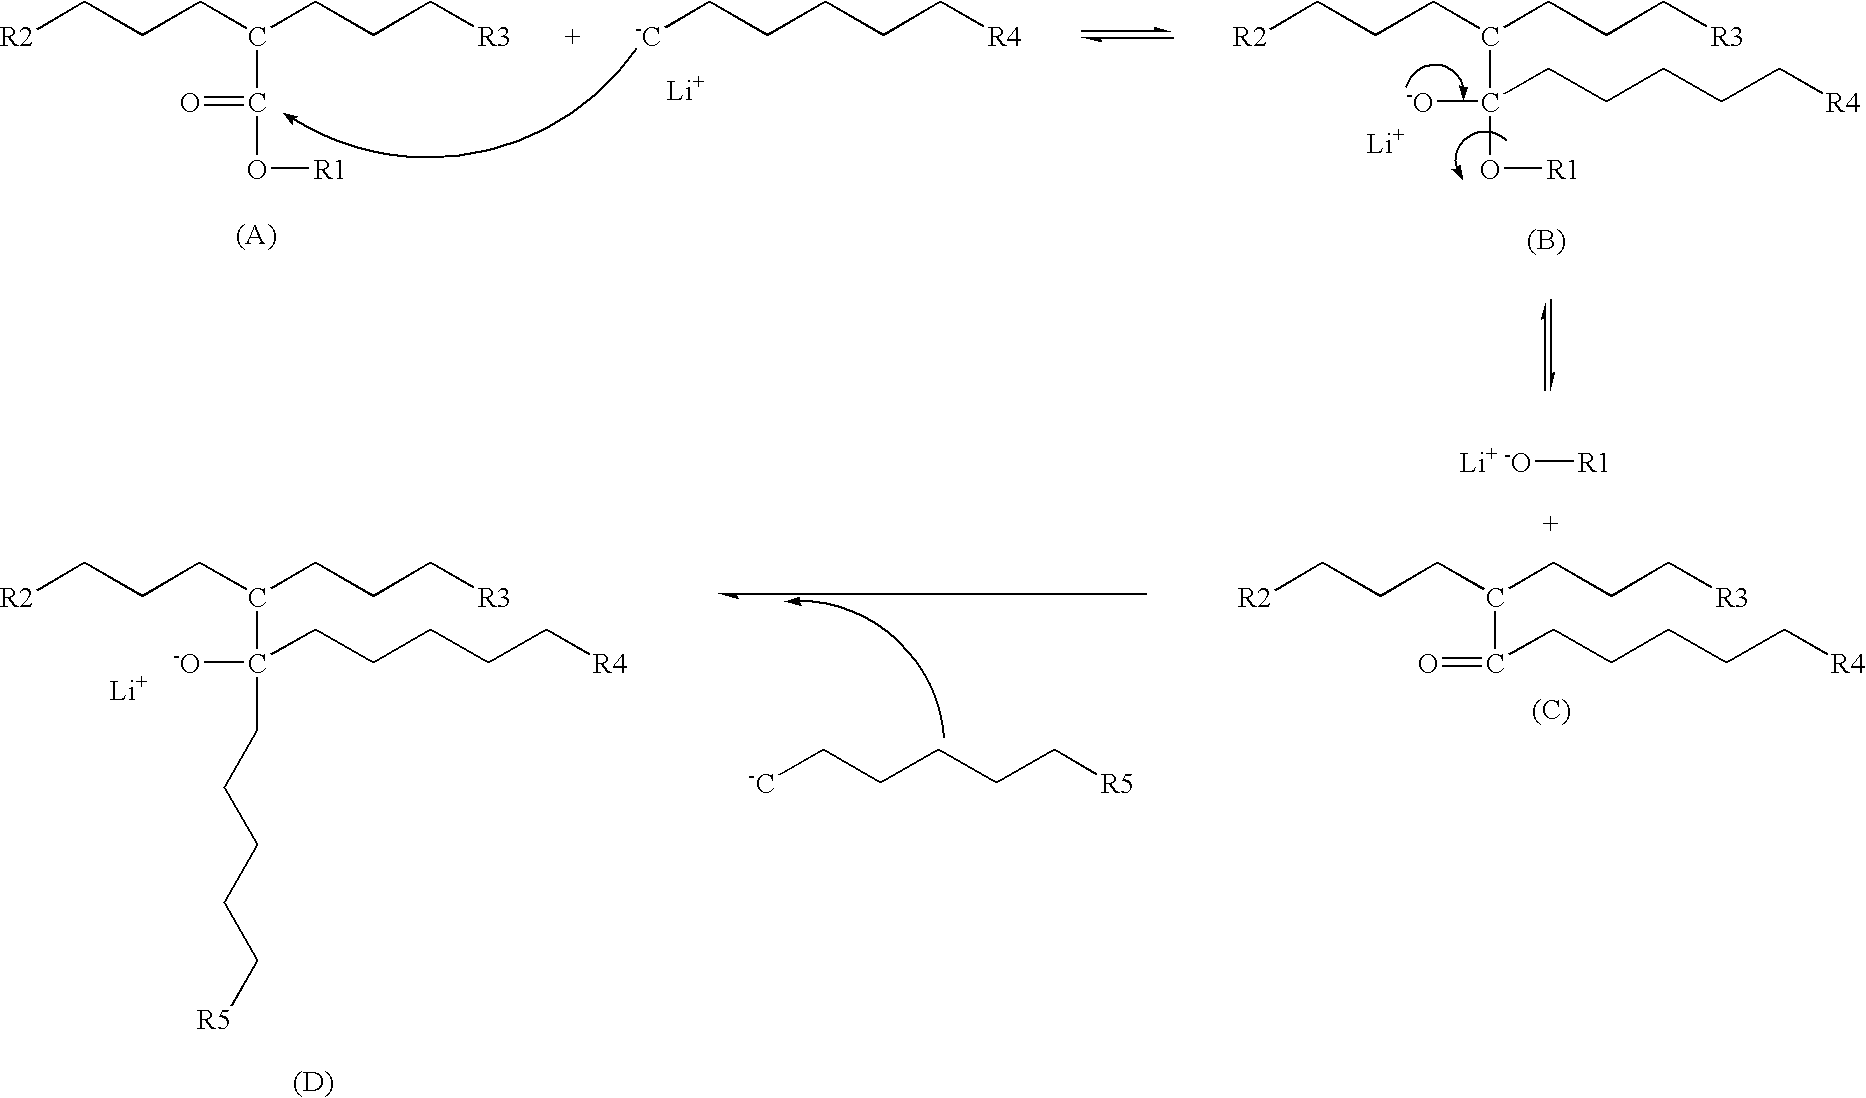 Radial multi-block copolymers